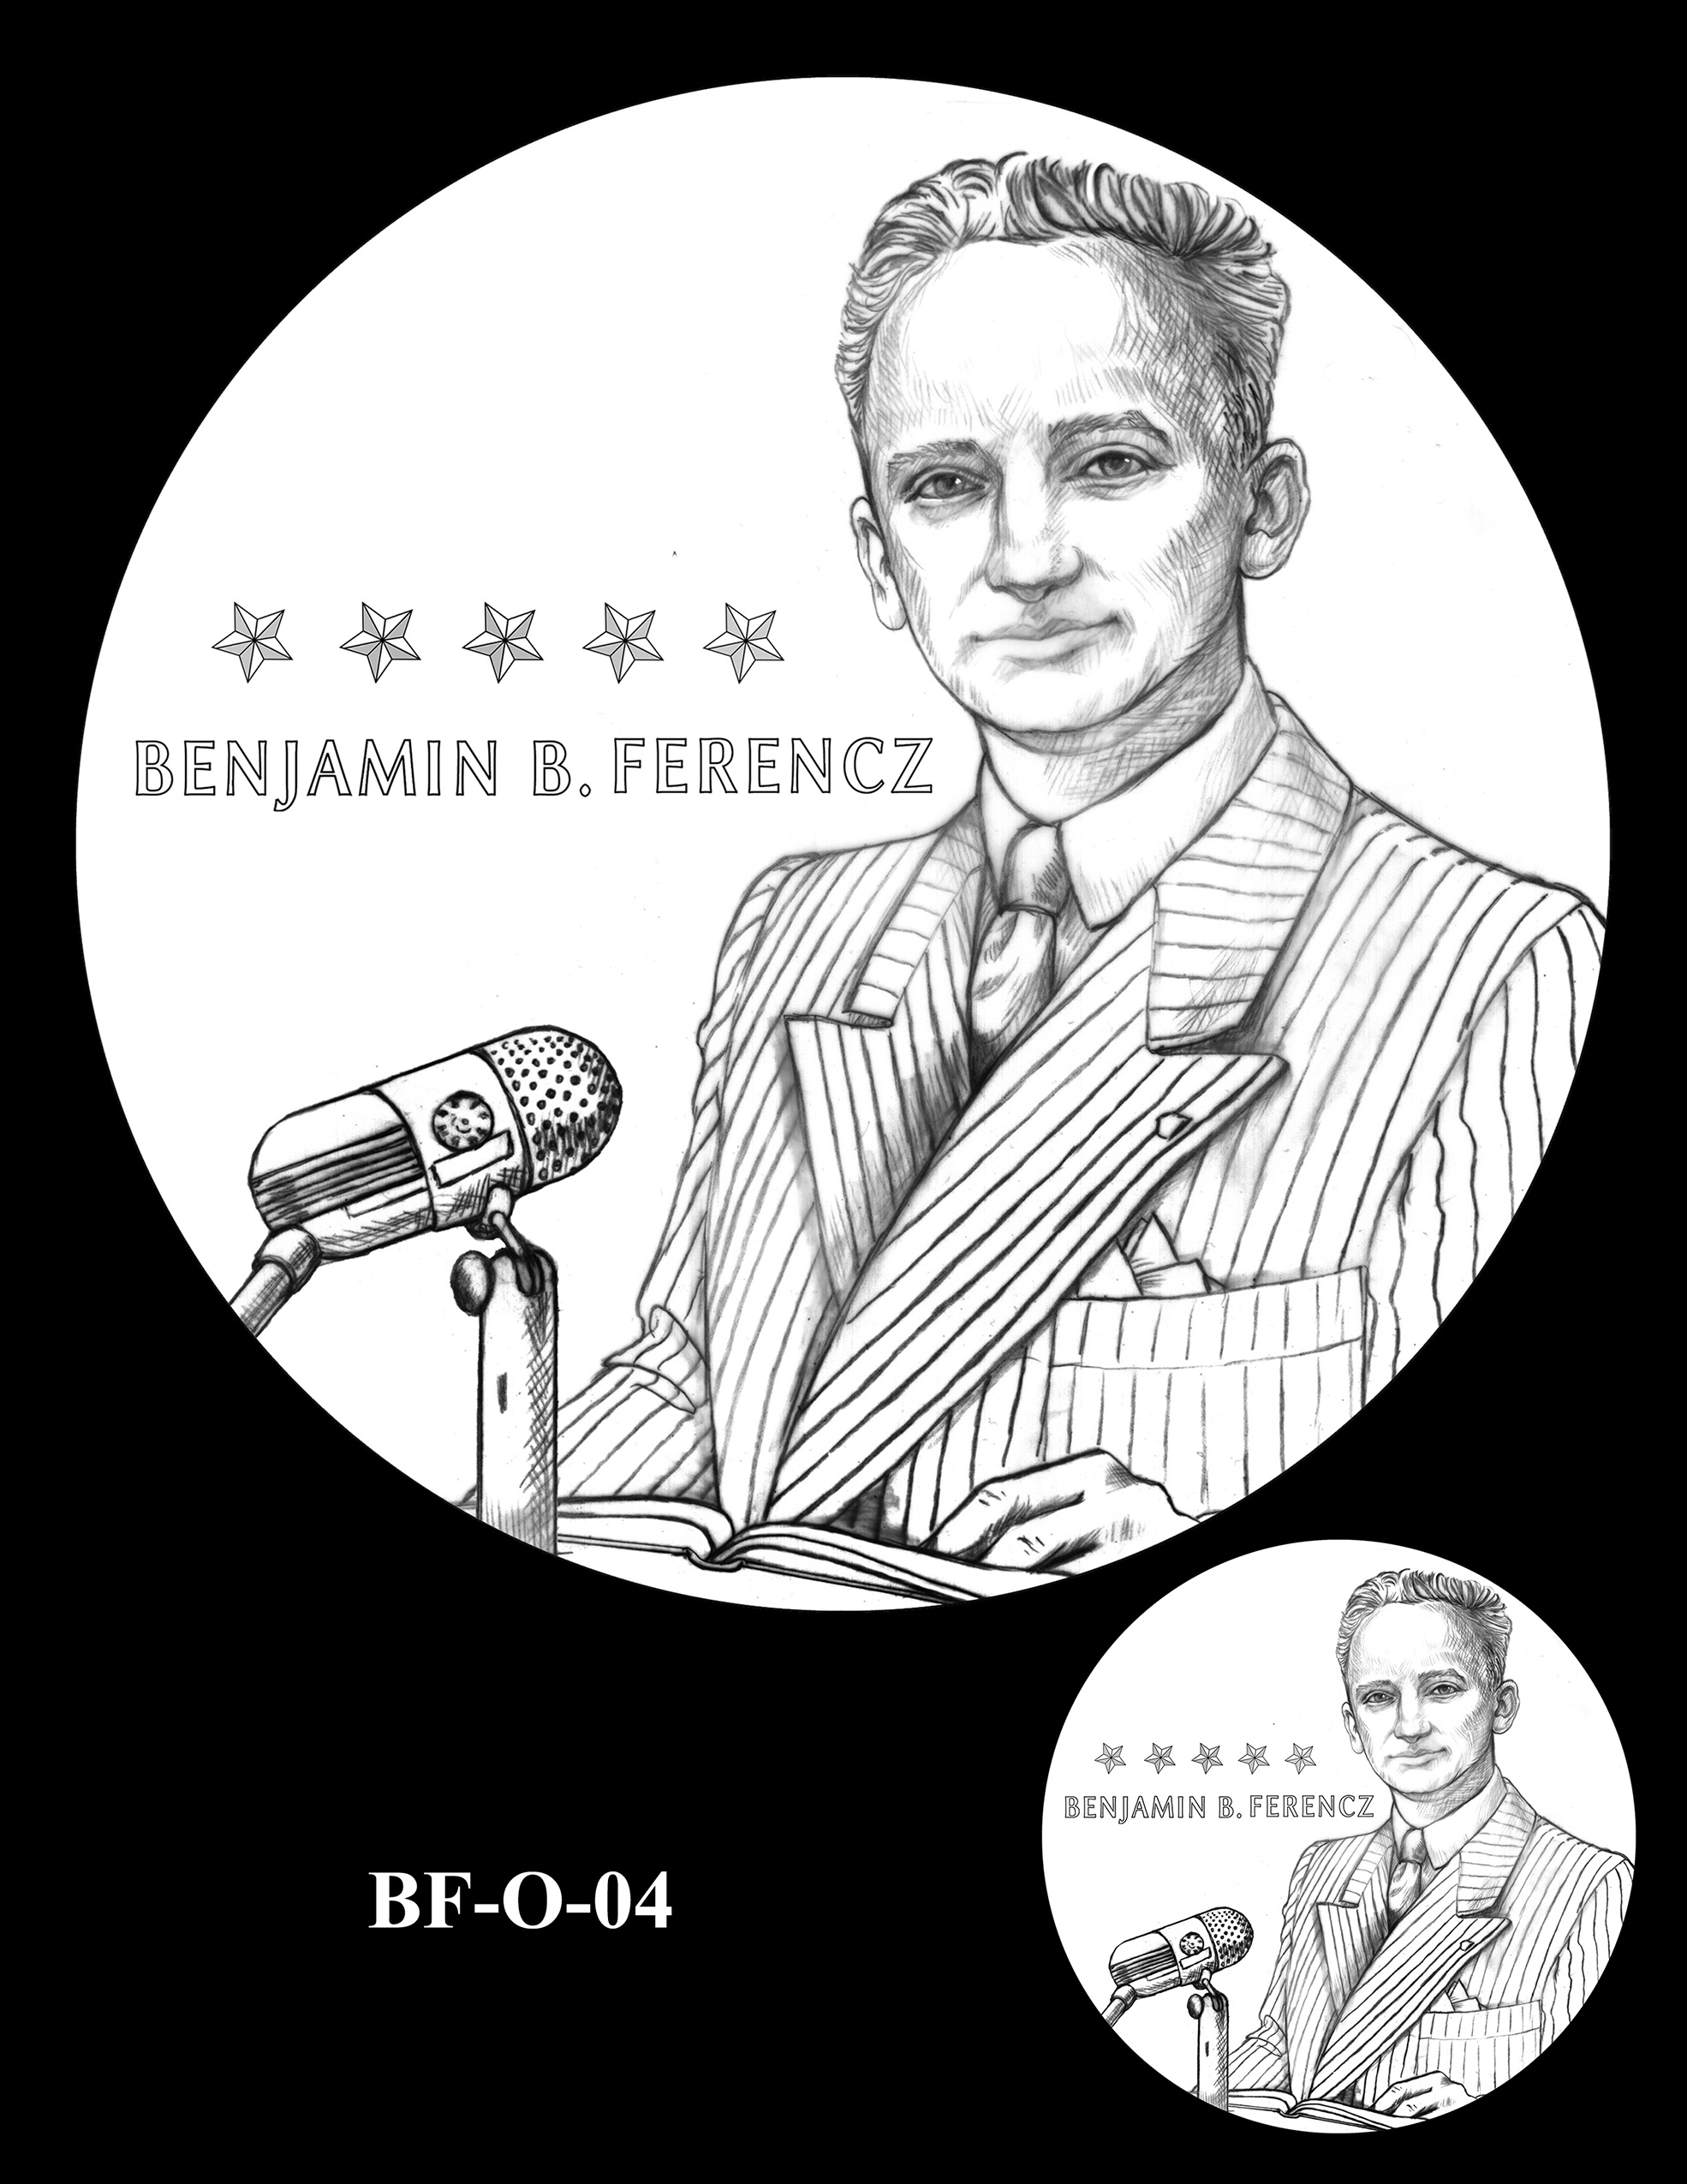 BF-O-04 -- Benjamin Ferencz Congressional Gold Medal